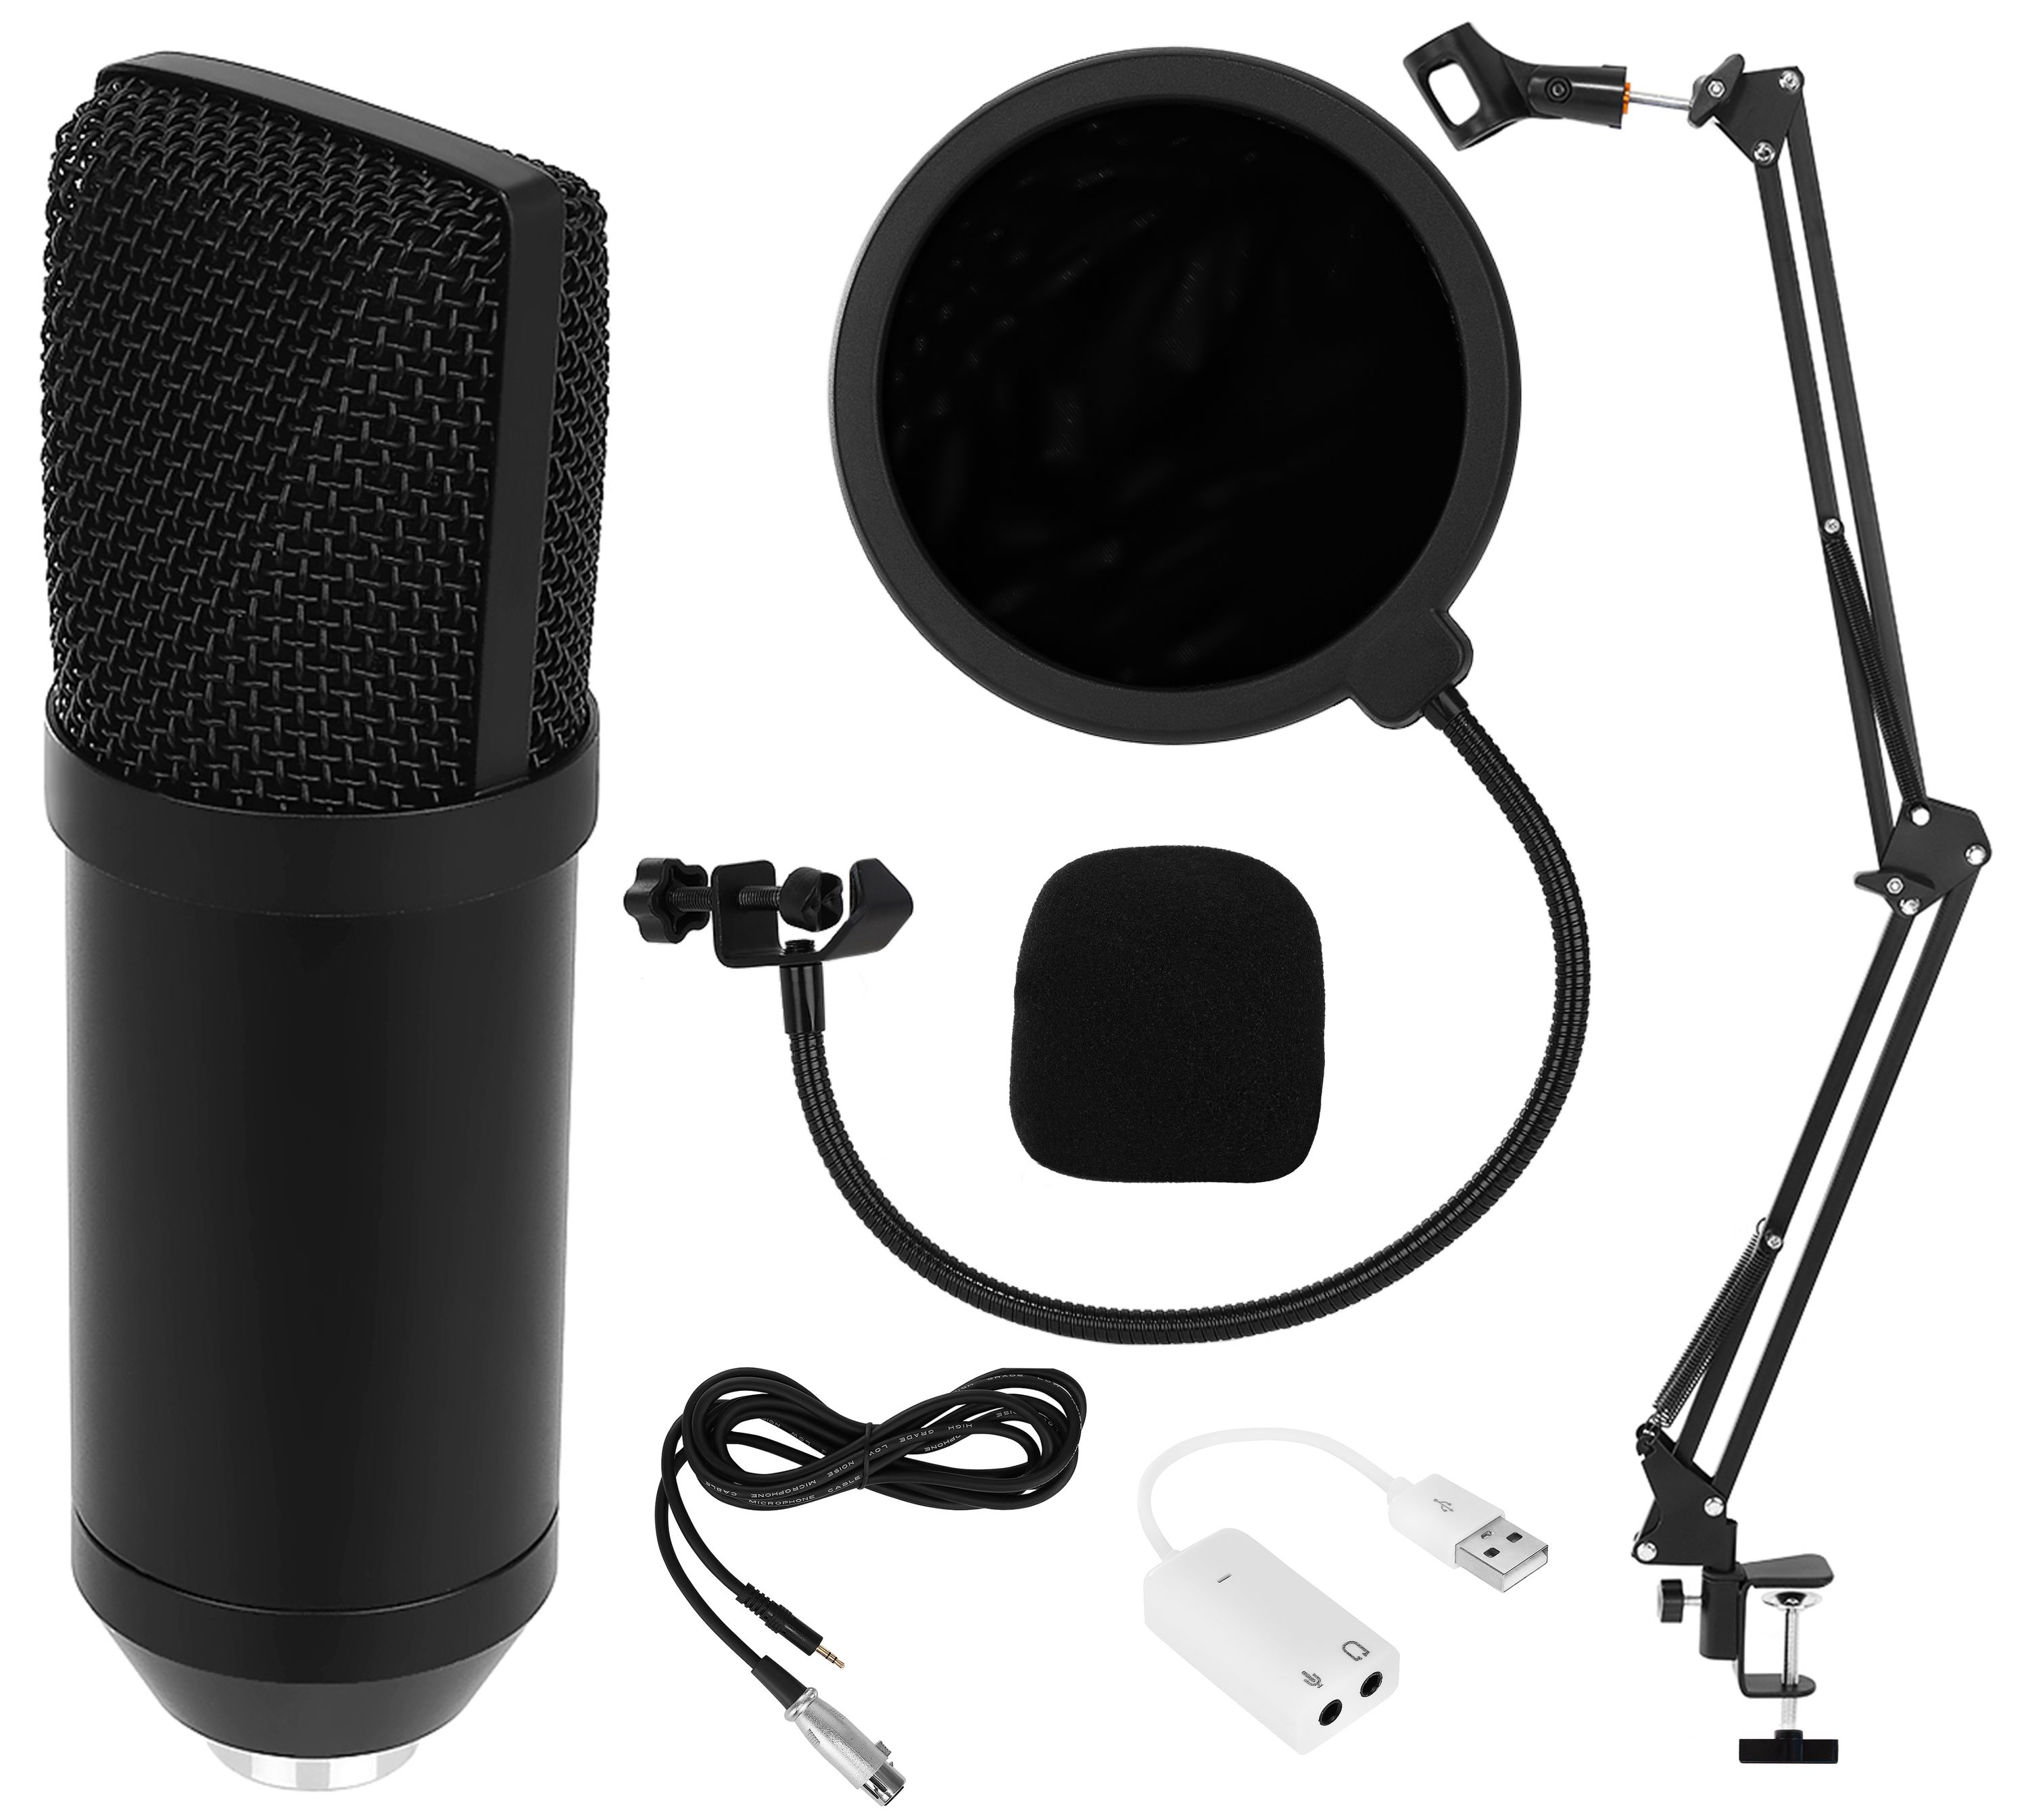 Kondensator microphone Mikrofon Kit Podcast Tischstativ mit 3,5mm Kabel NICE 09 